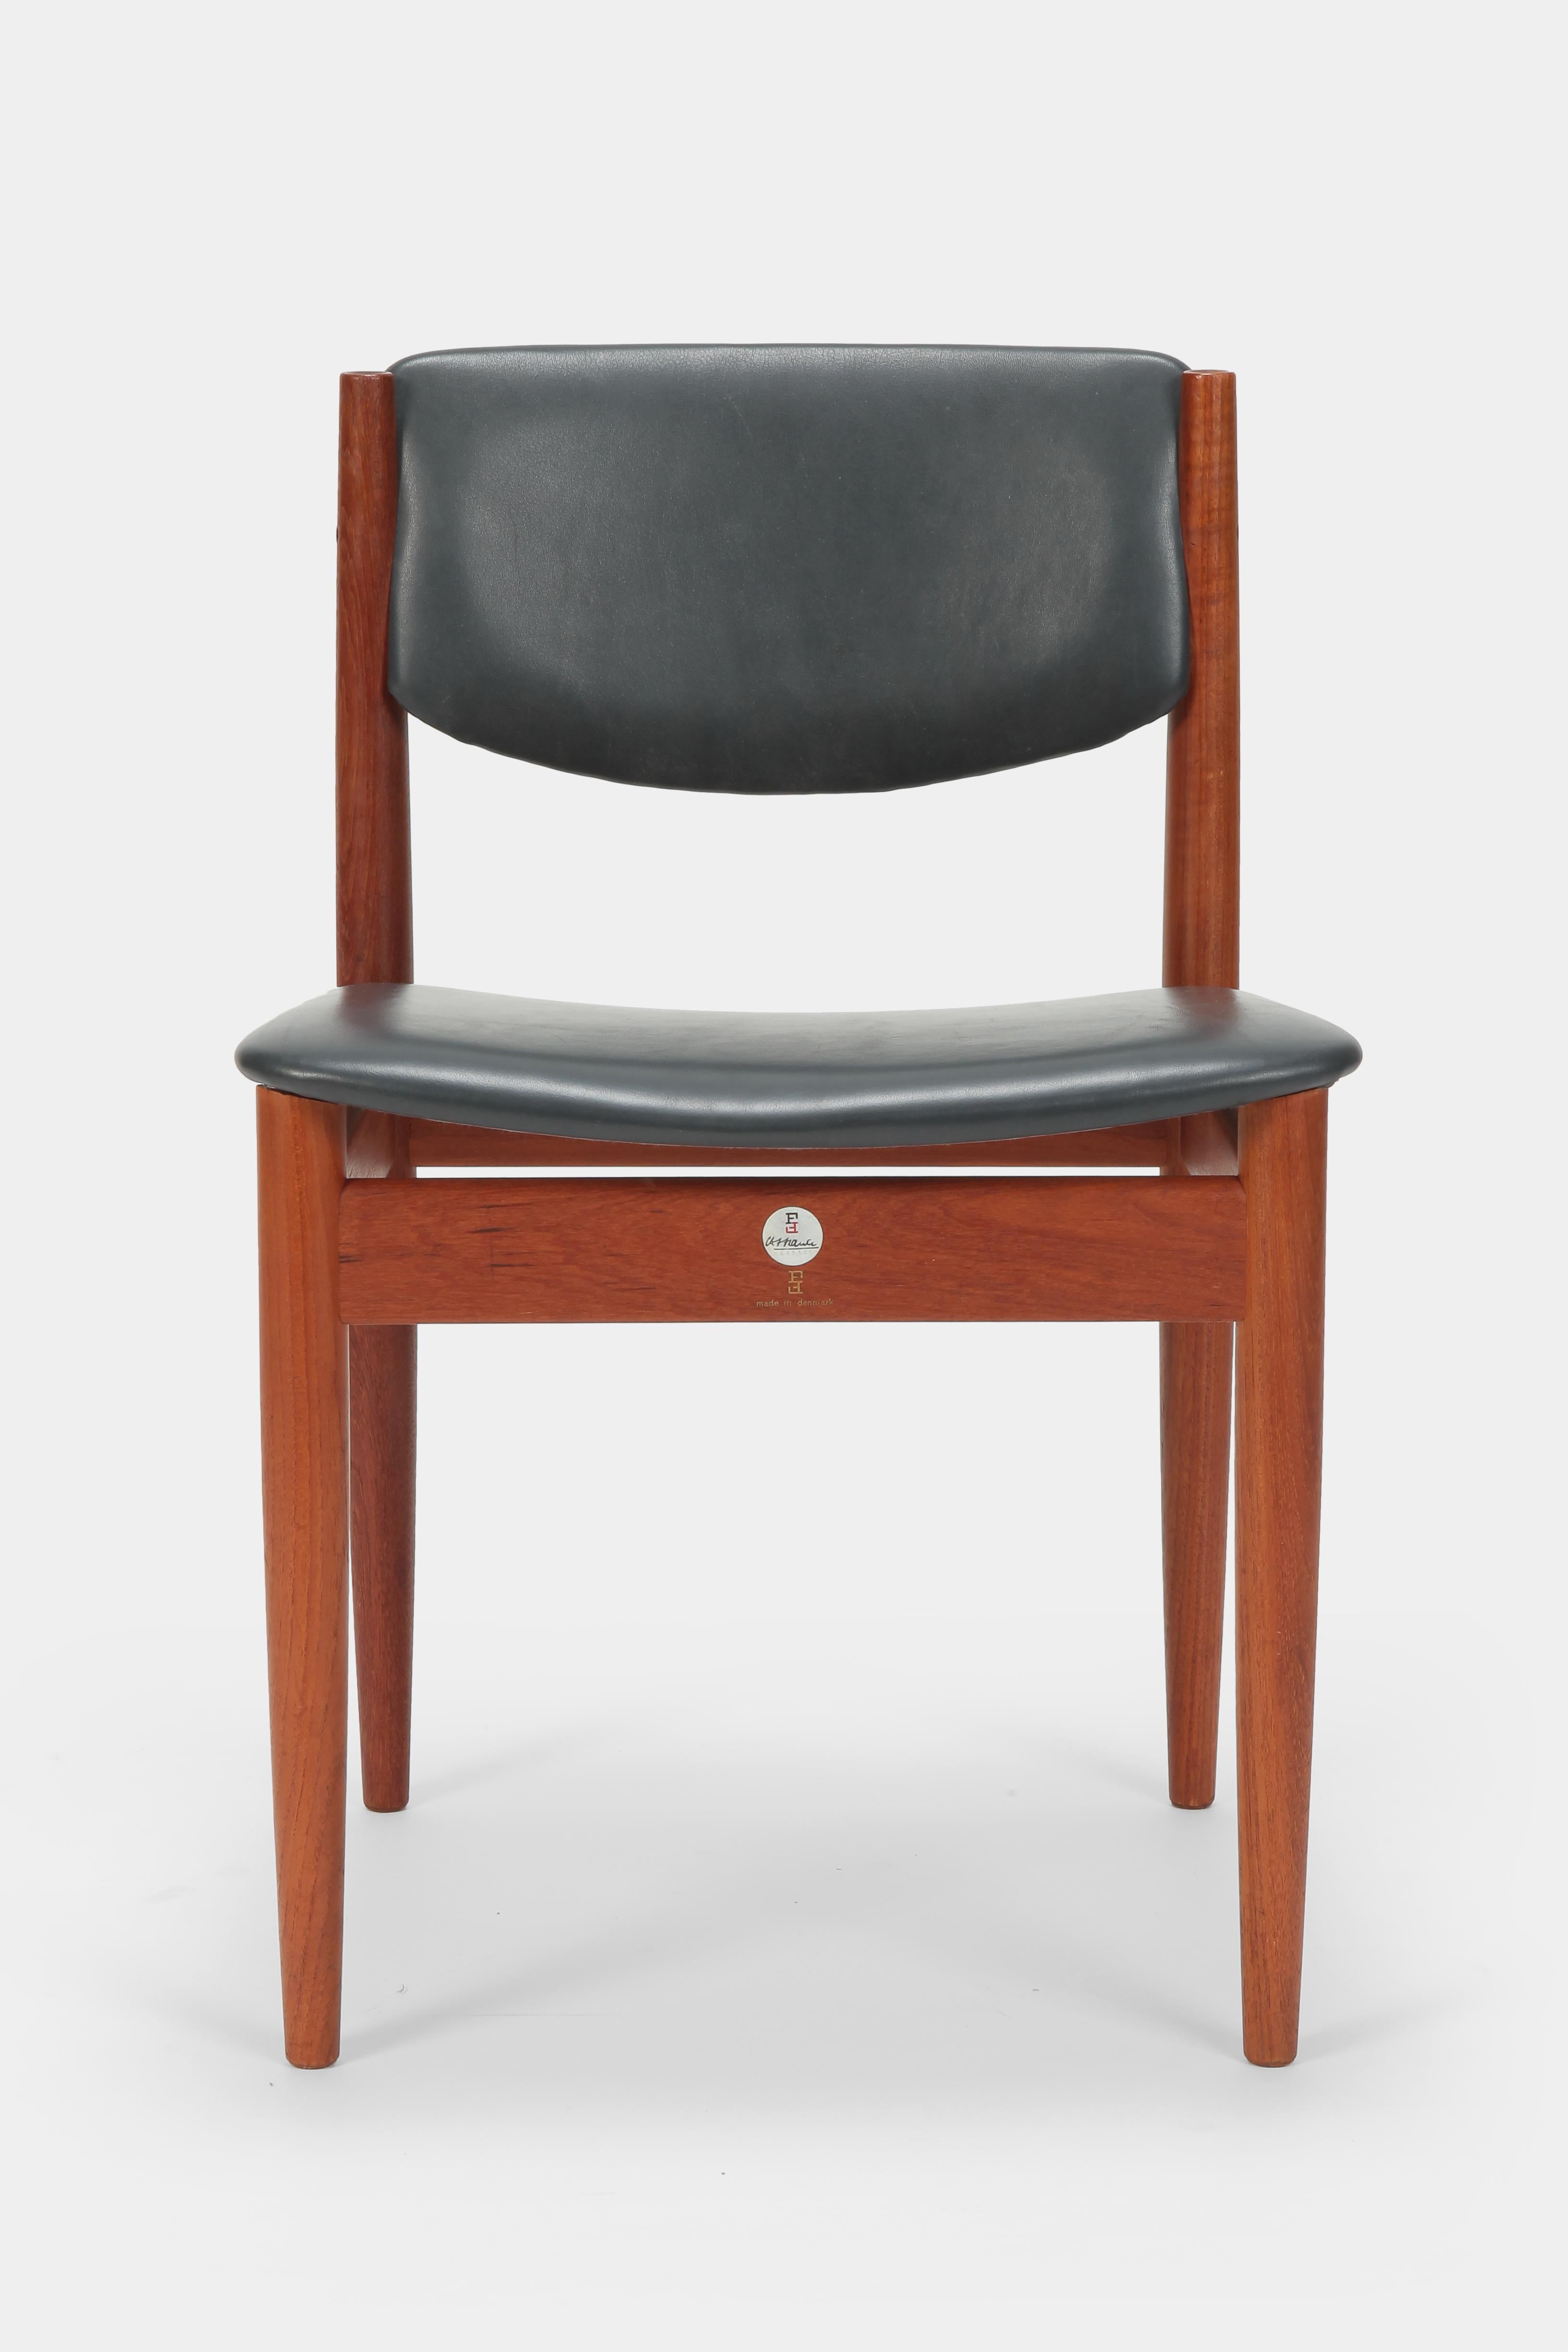 Pair Finn Juhl Model 197 Chairs Leather Teak, 1960s For Sale 1